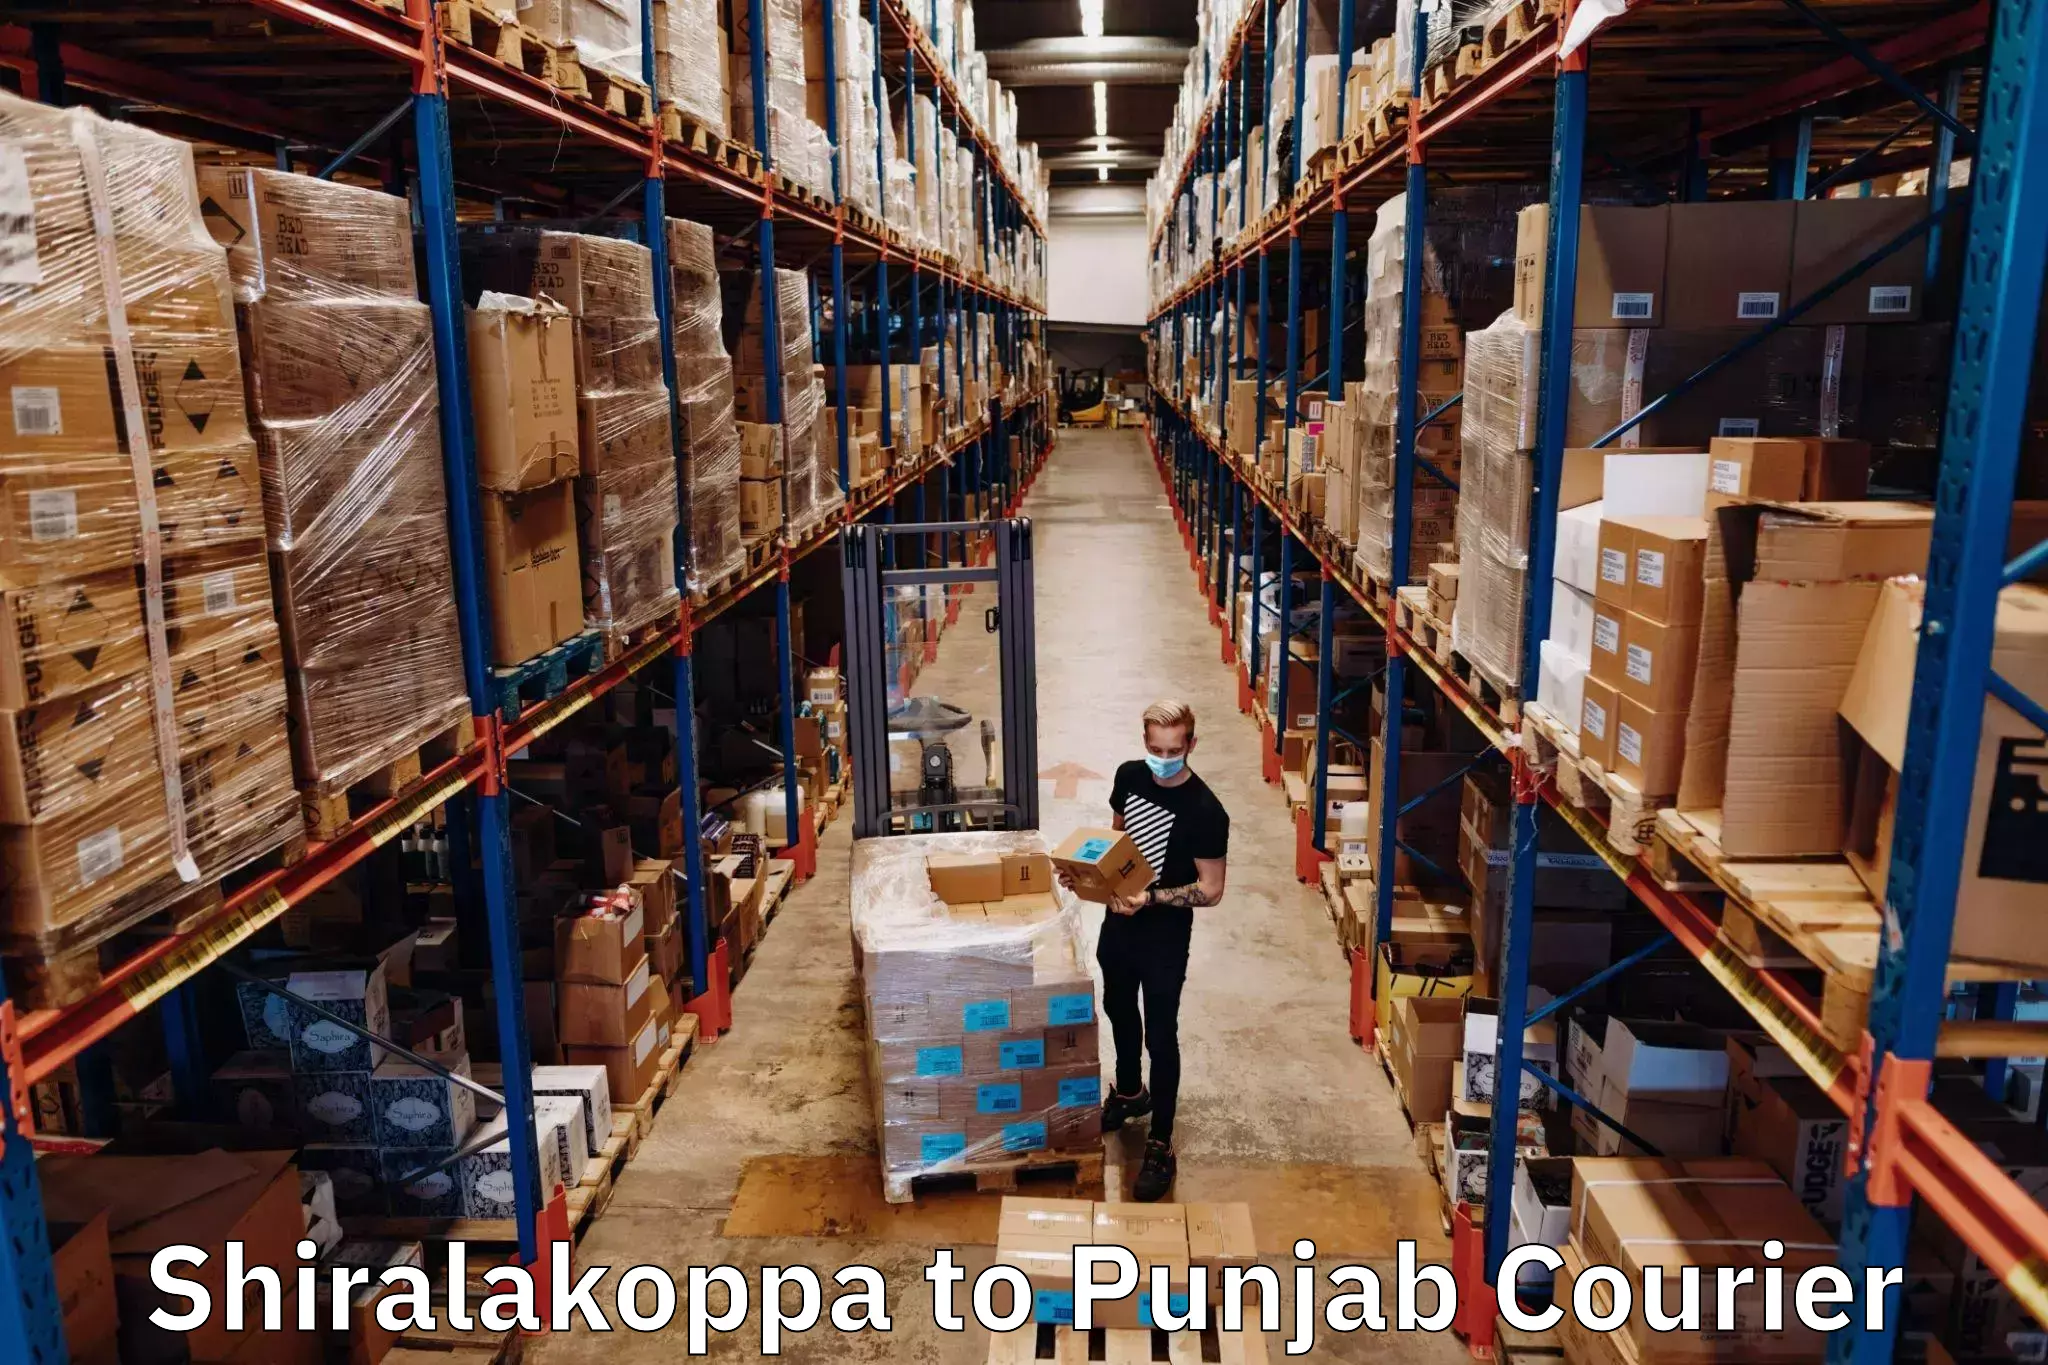 Global shipping networks Shiralakoppa to Tarsikka